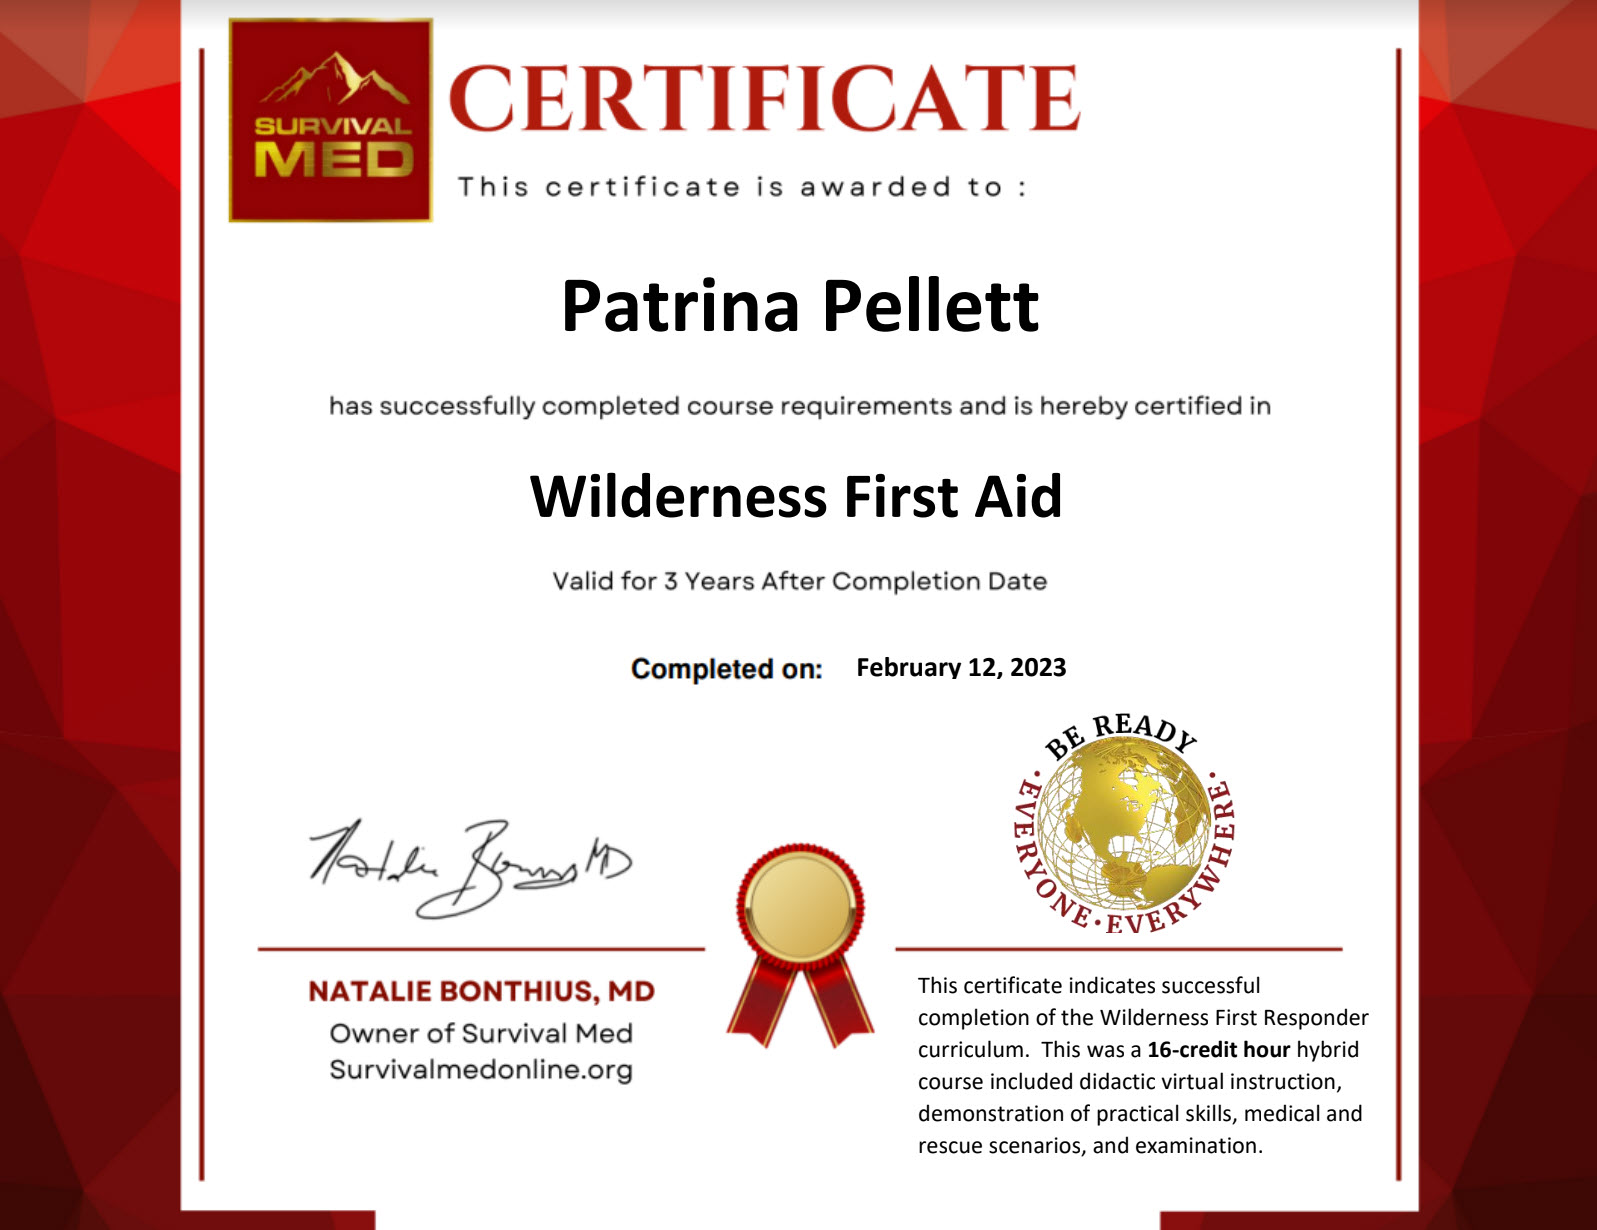 SurvivalMed Wilderness First Aid Certification